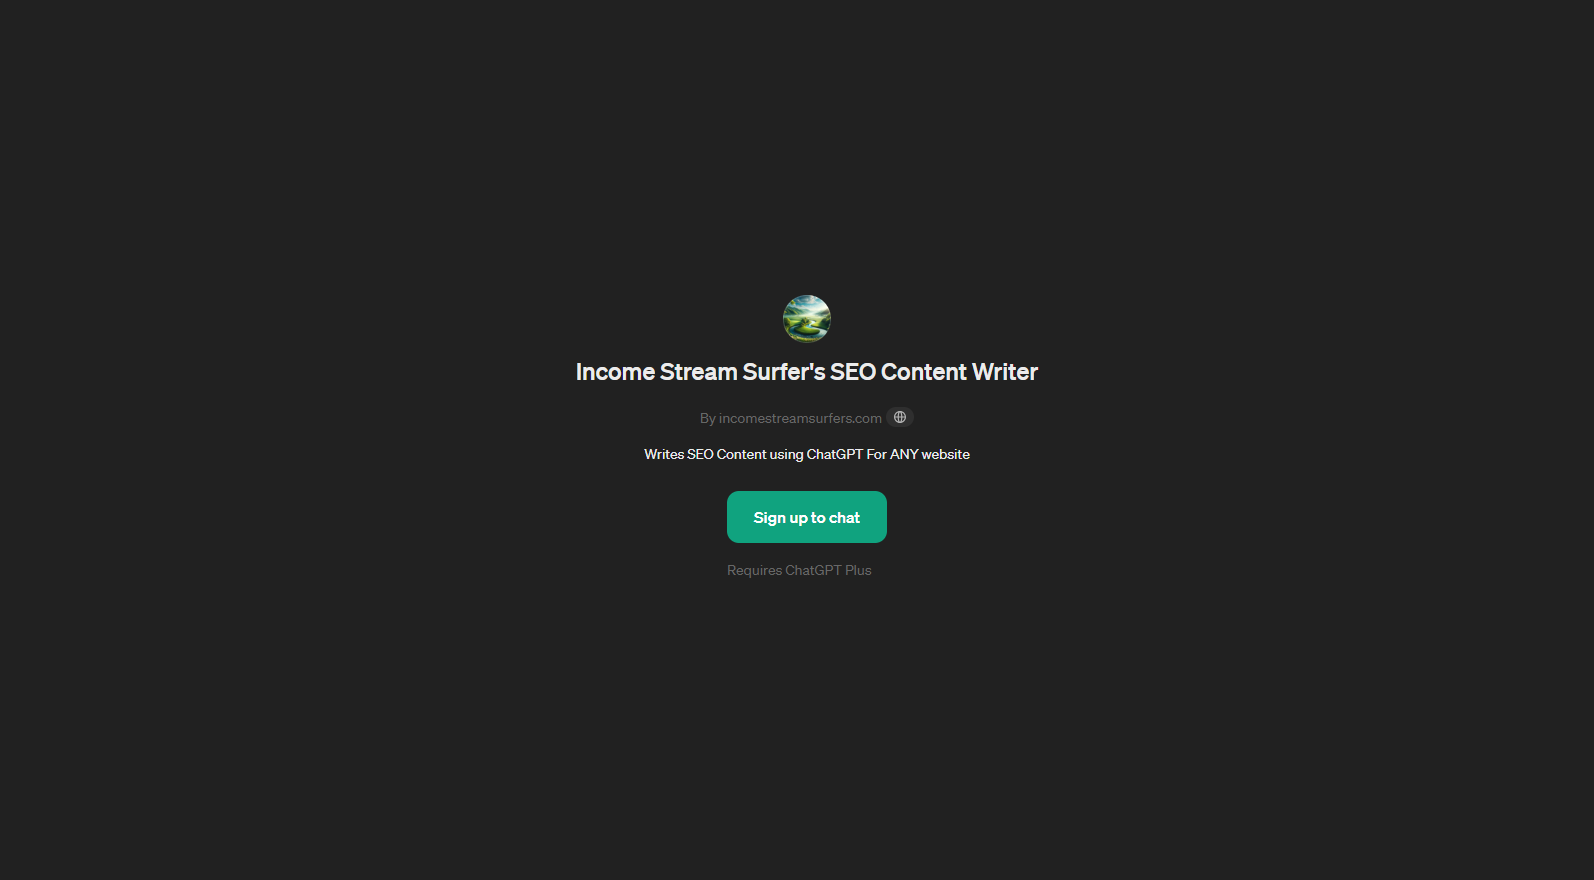 Income Stream Surfer's SEO Content Writer website